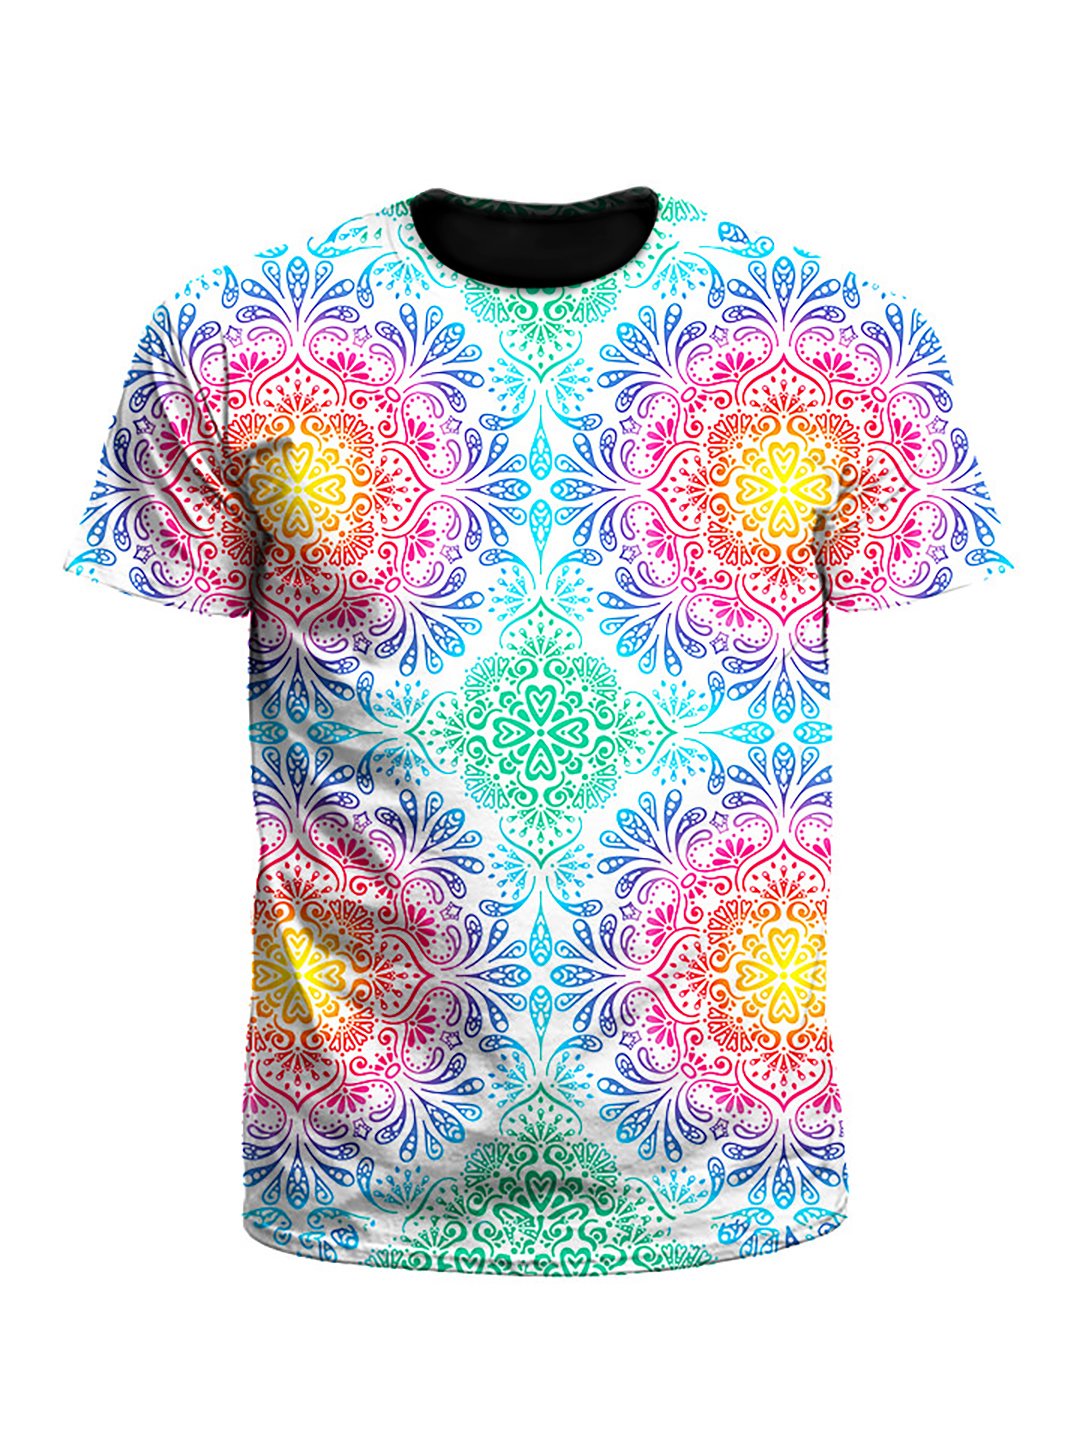 Dyed Doodles Rainbow Paisley Mandala Unisex T-Shirt - Boogie Threads